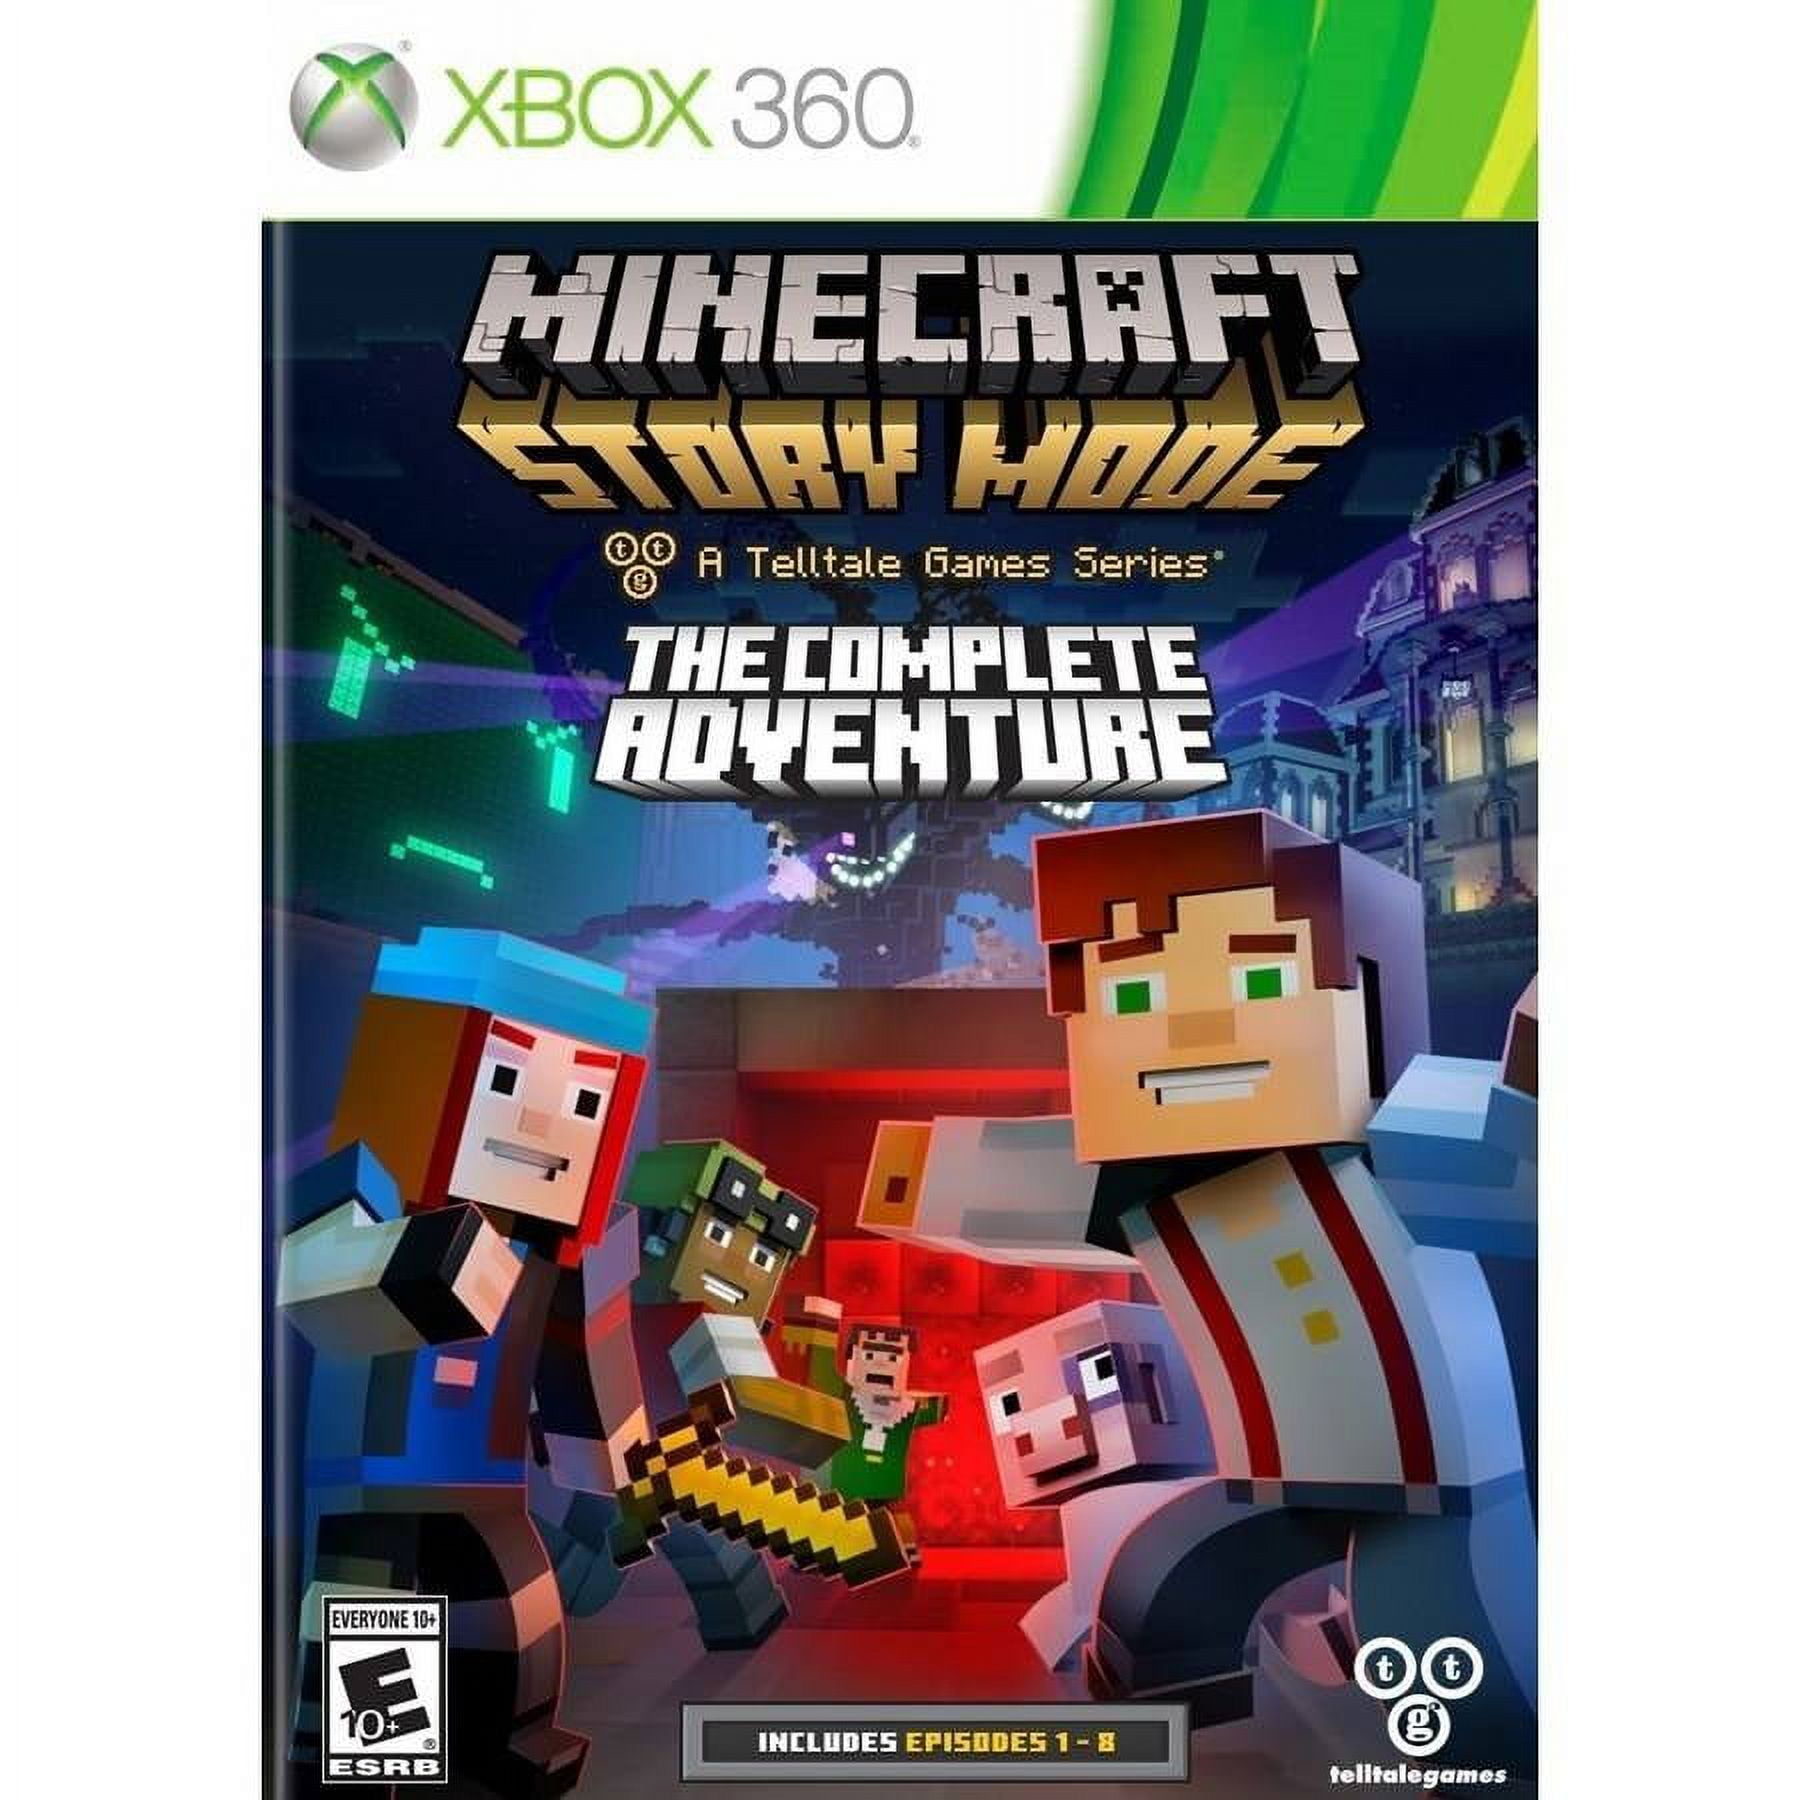 Jogo Minecraft Story Mode Season Pass Playstation 3 Ps3